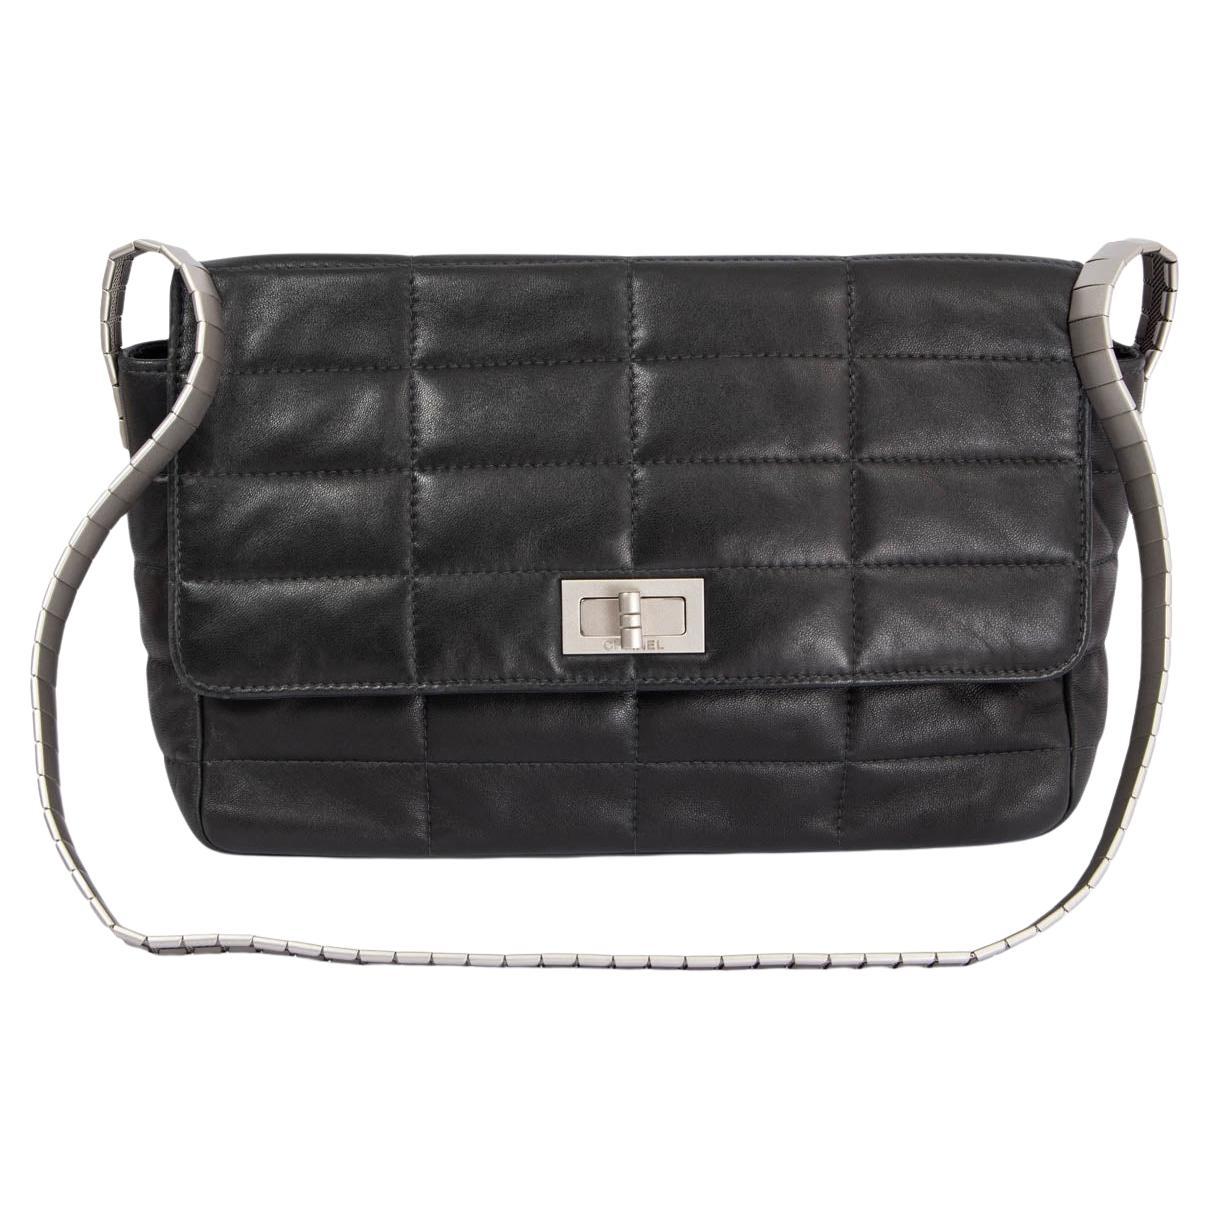 CHANEL black leather CHOCOLATE BAR MADEMOISELLE MEDIUM FLAP Shoulder Bag For Sale